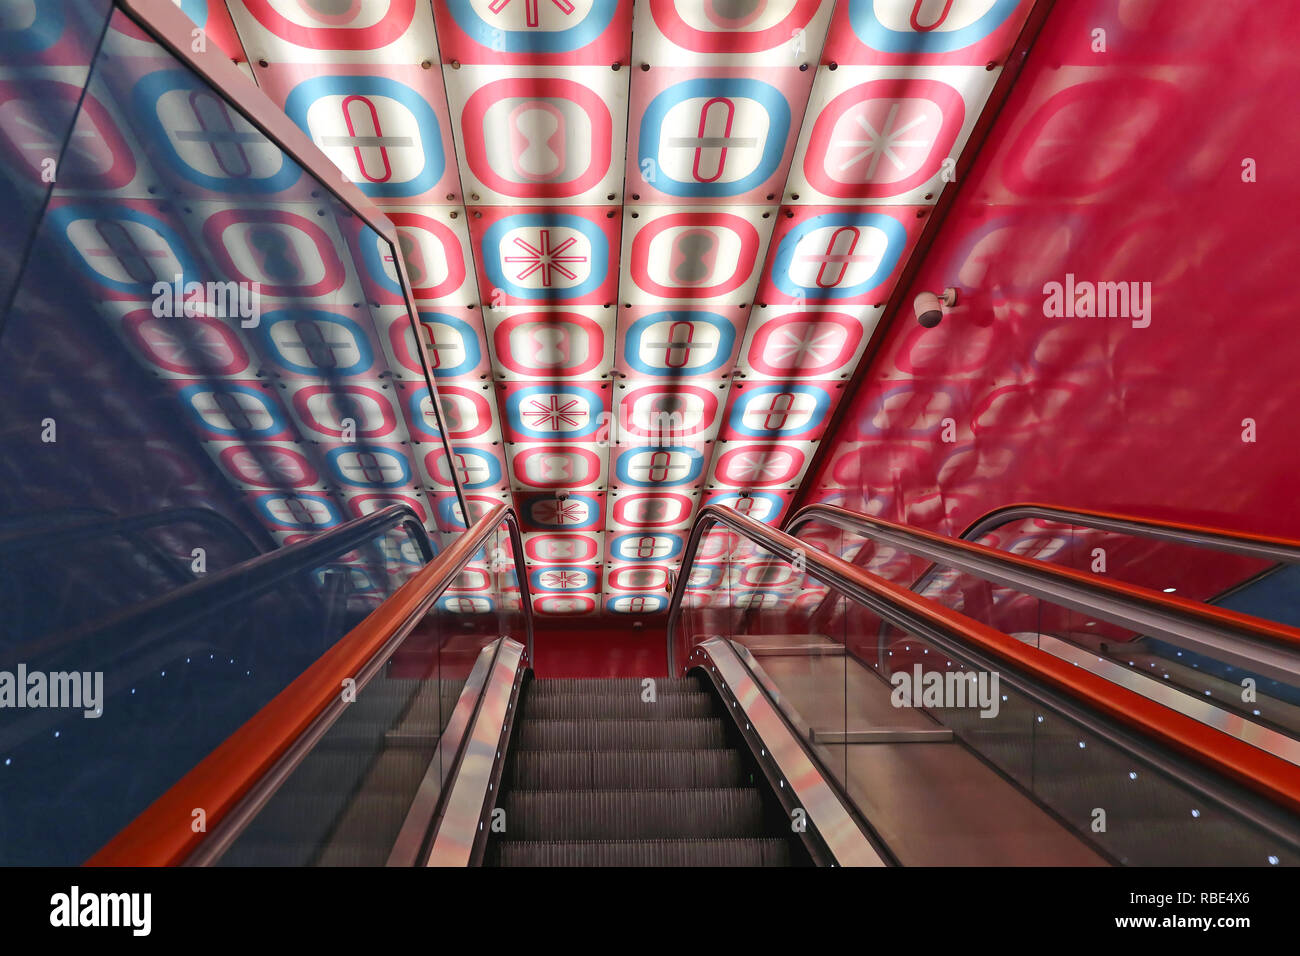 NAPLES, ITALY - JUNE 25: University Metro Station in Naples on JUNE 25, 2014. Escalators in Universita Art Station Designed by Architect Karim Rashid  Stock Photo